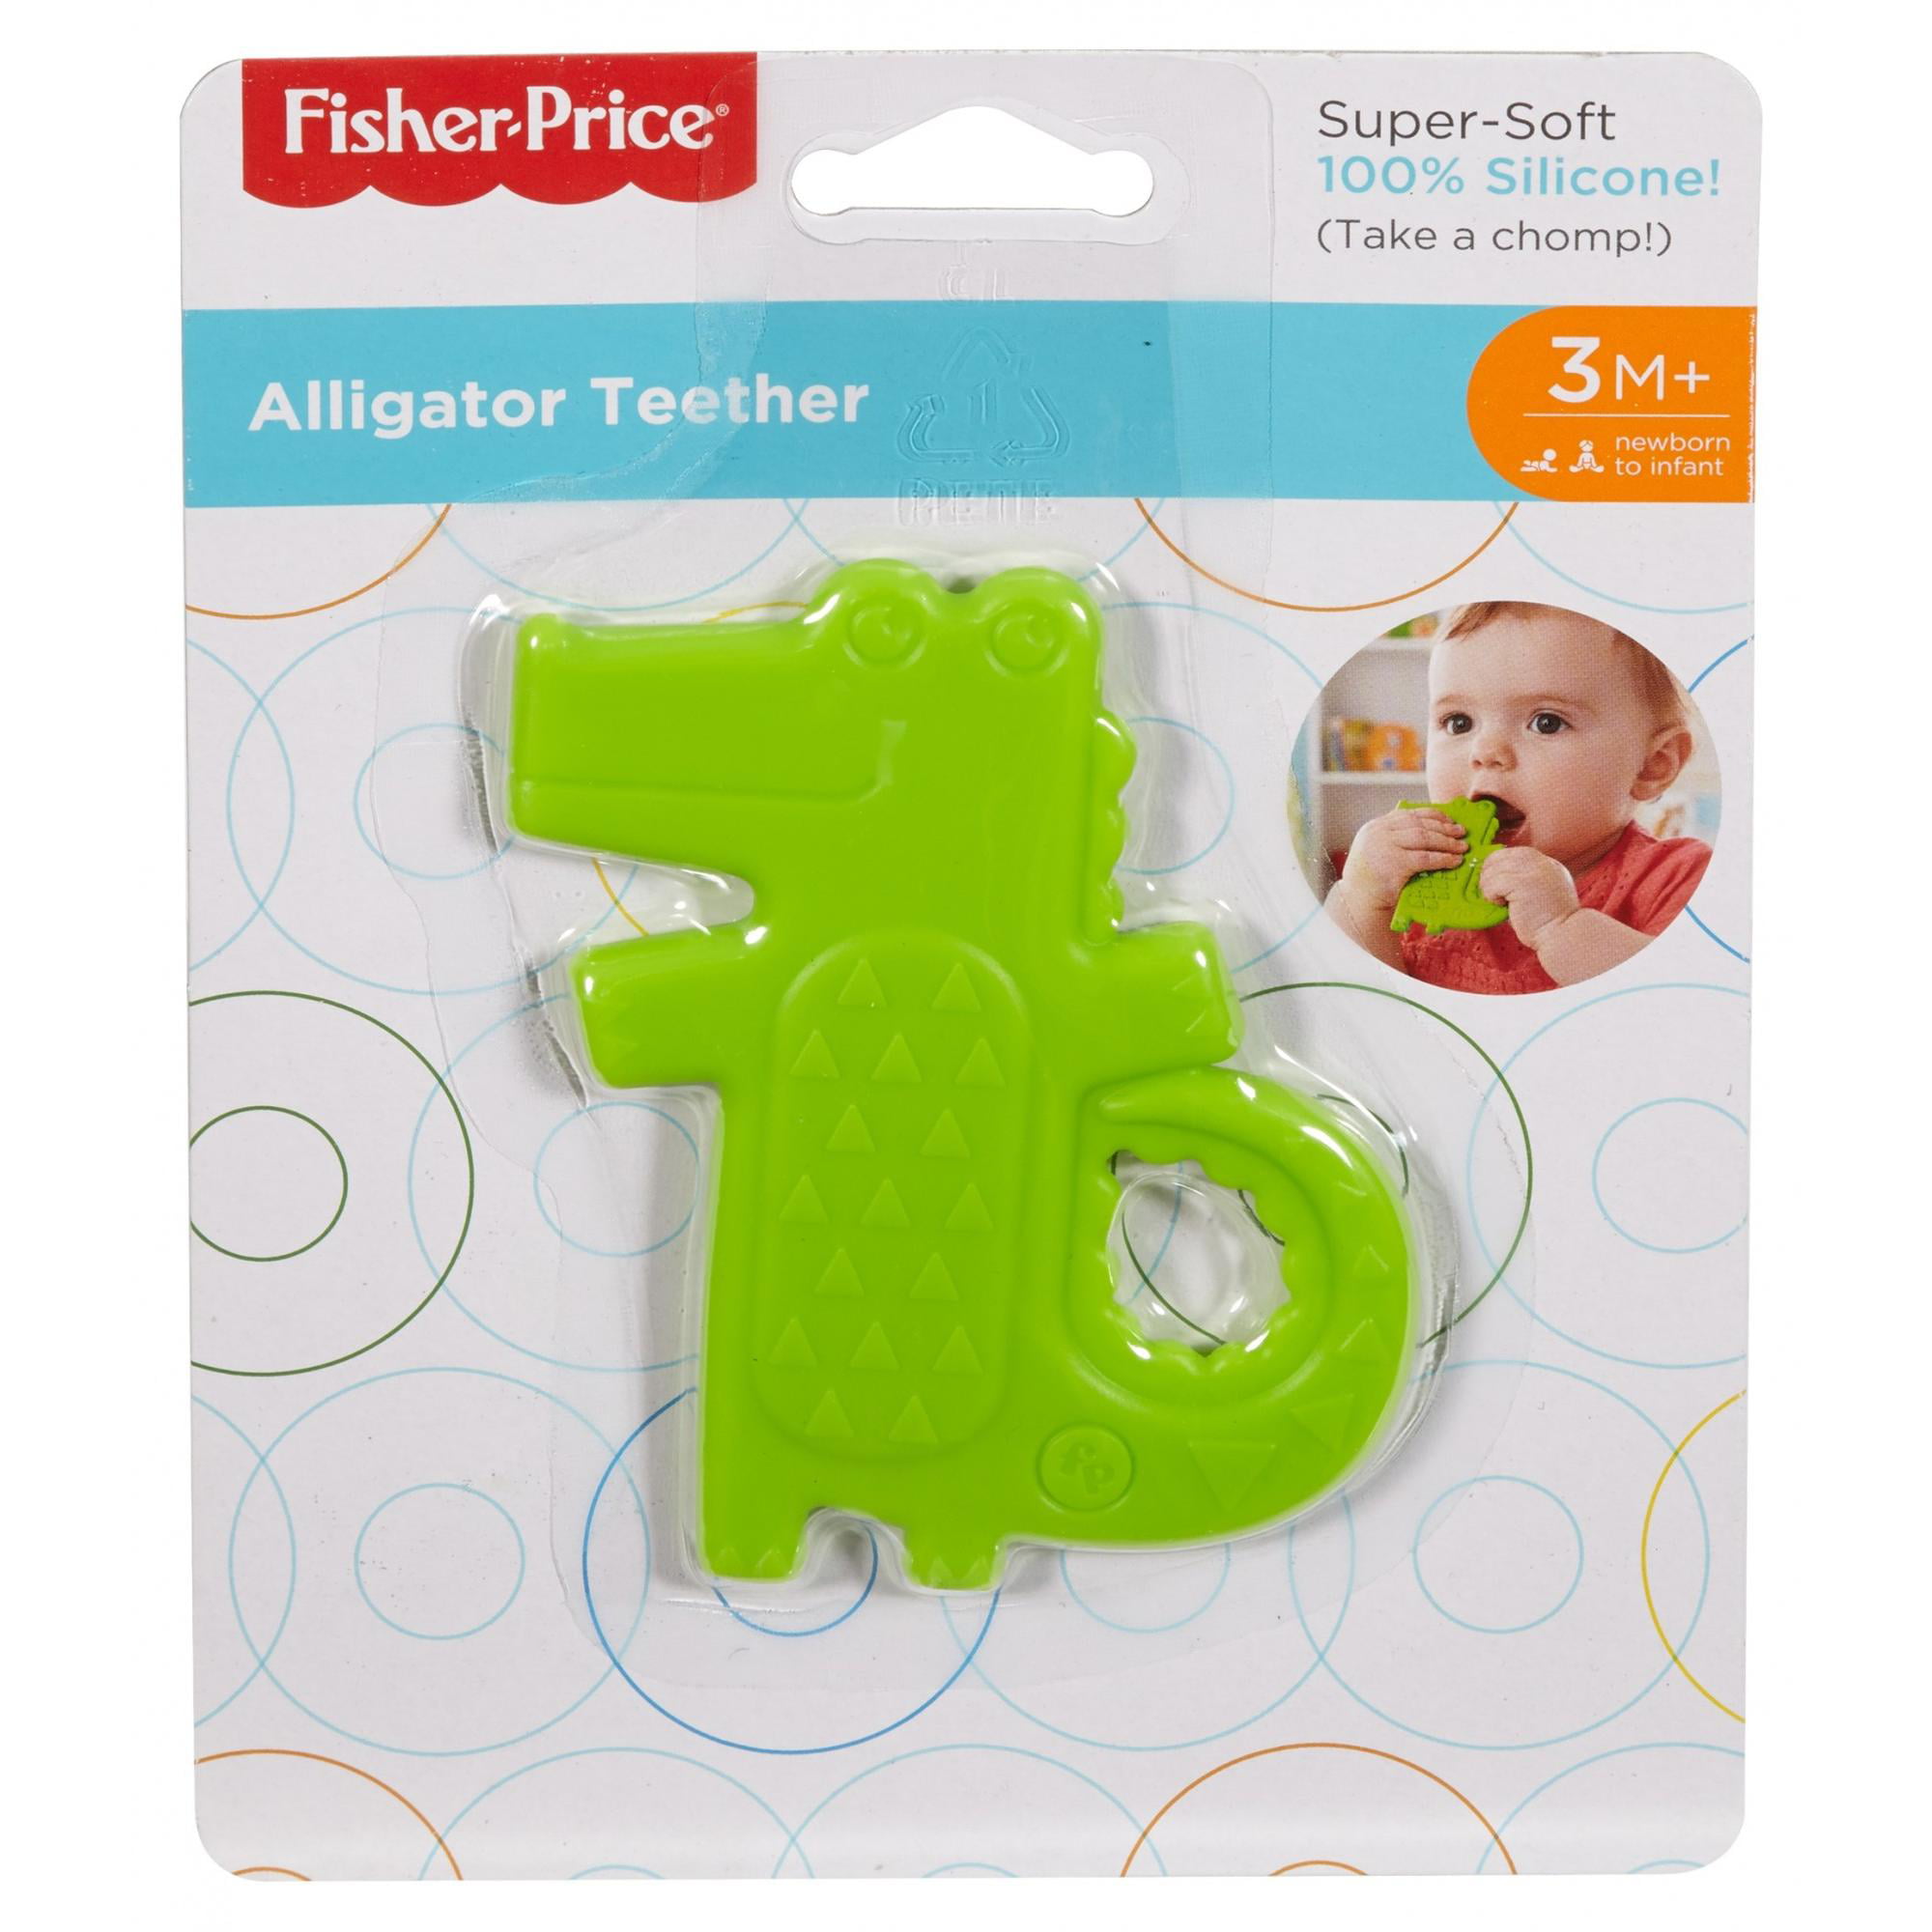 Fisher-Price Alligator Teether 